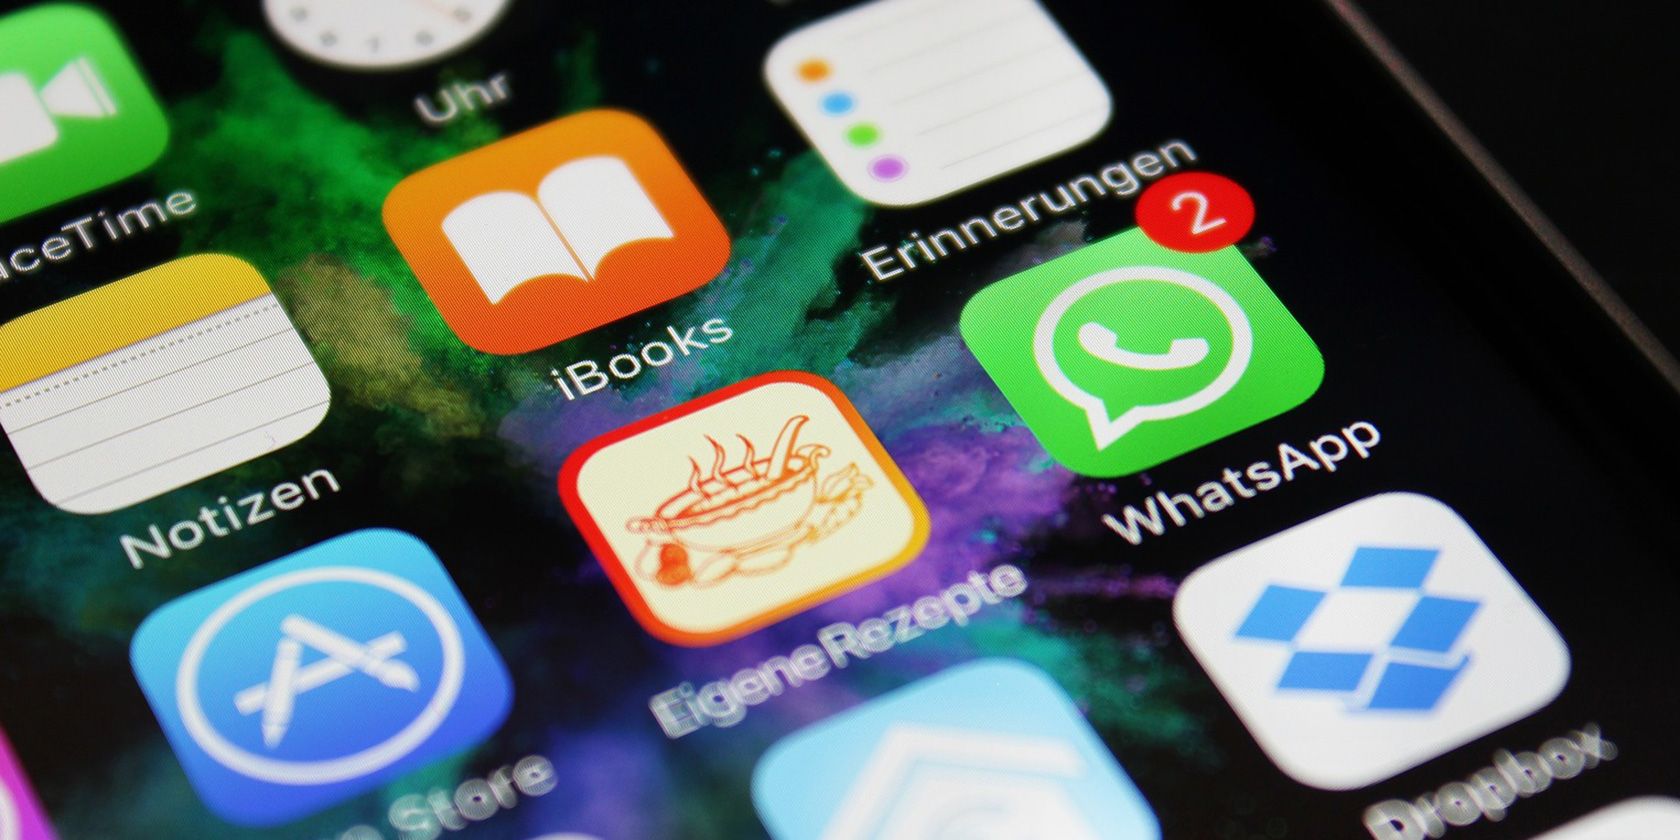 WhatsApp will no longer support iOS 9